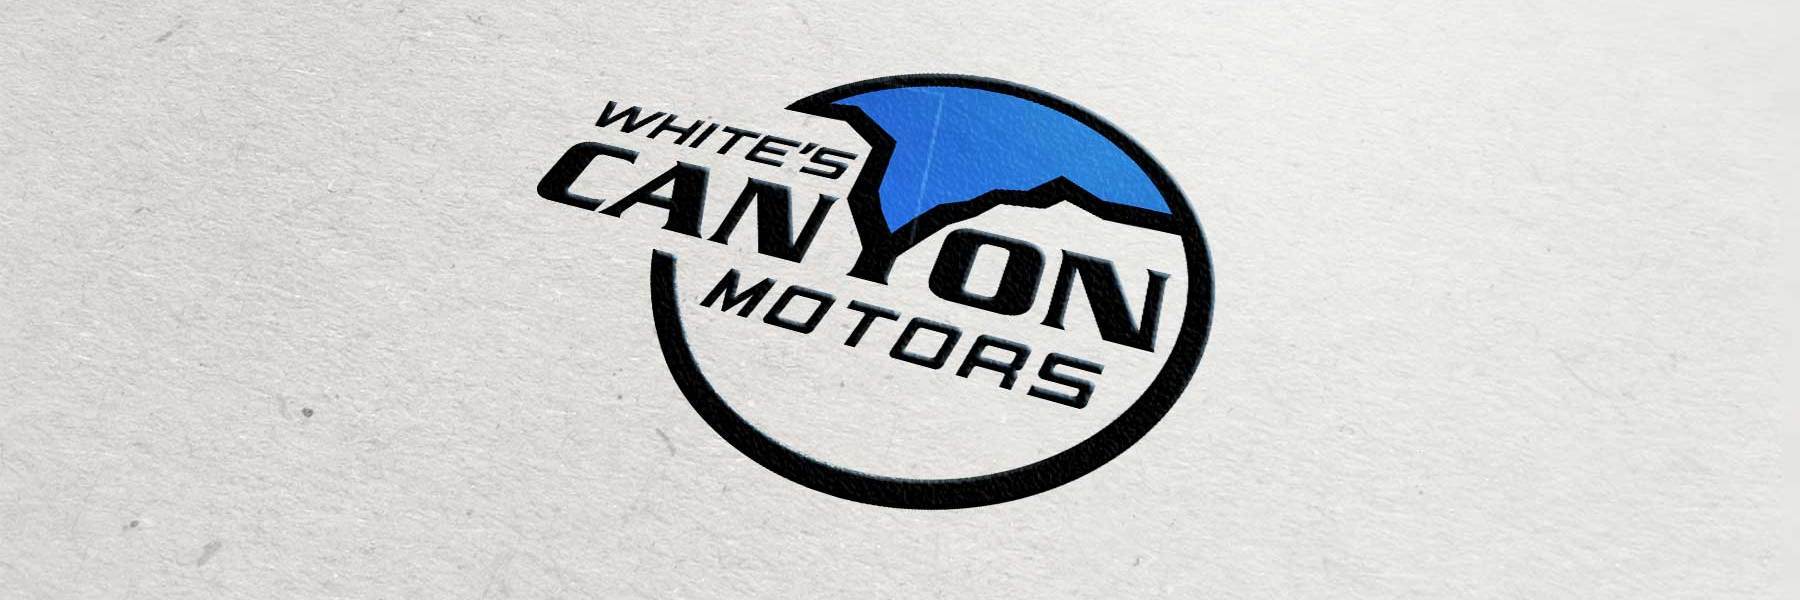 White's Canyon Motors Logo